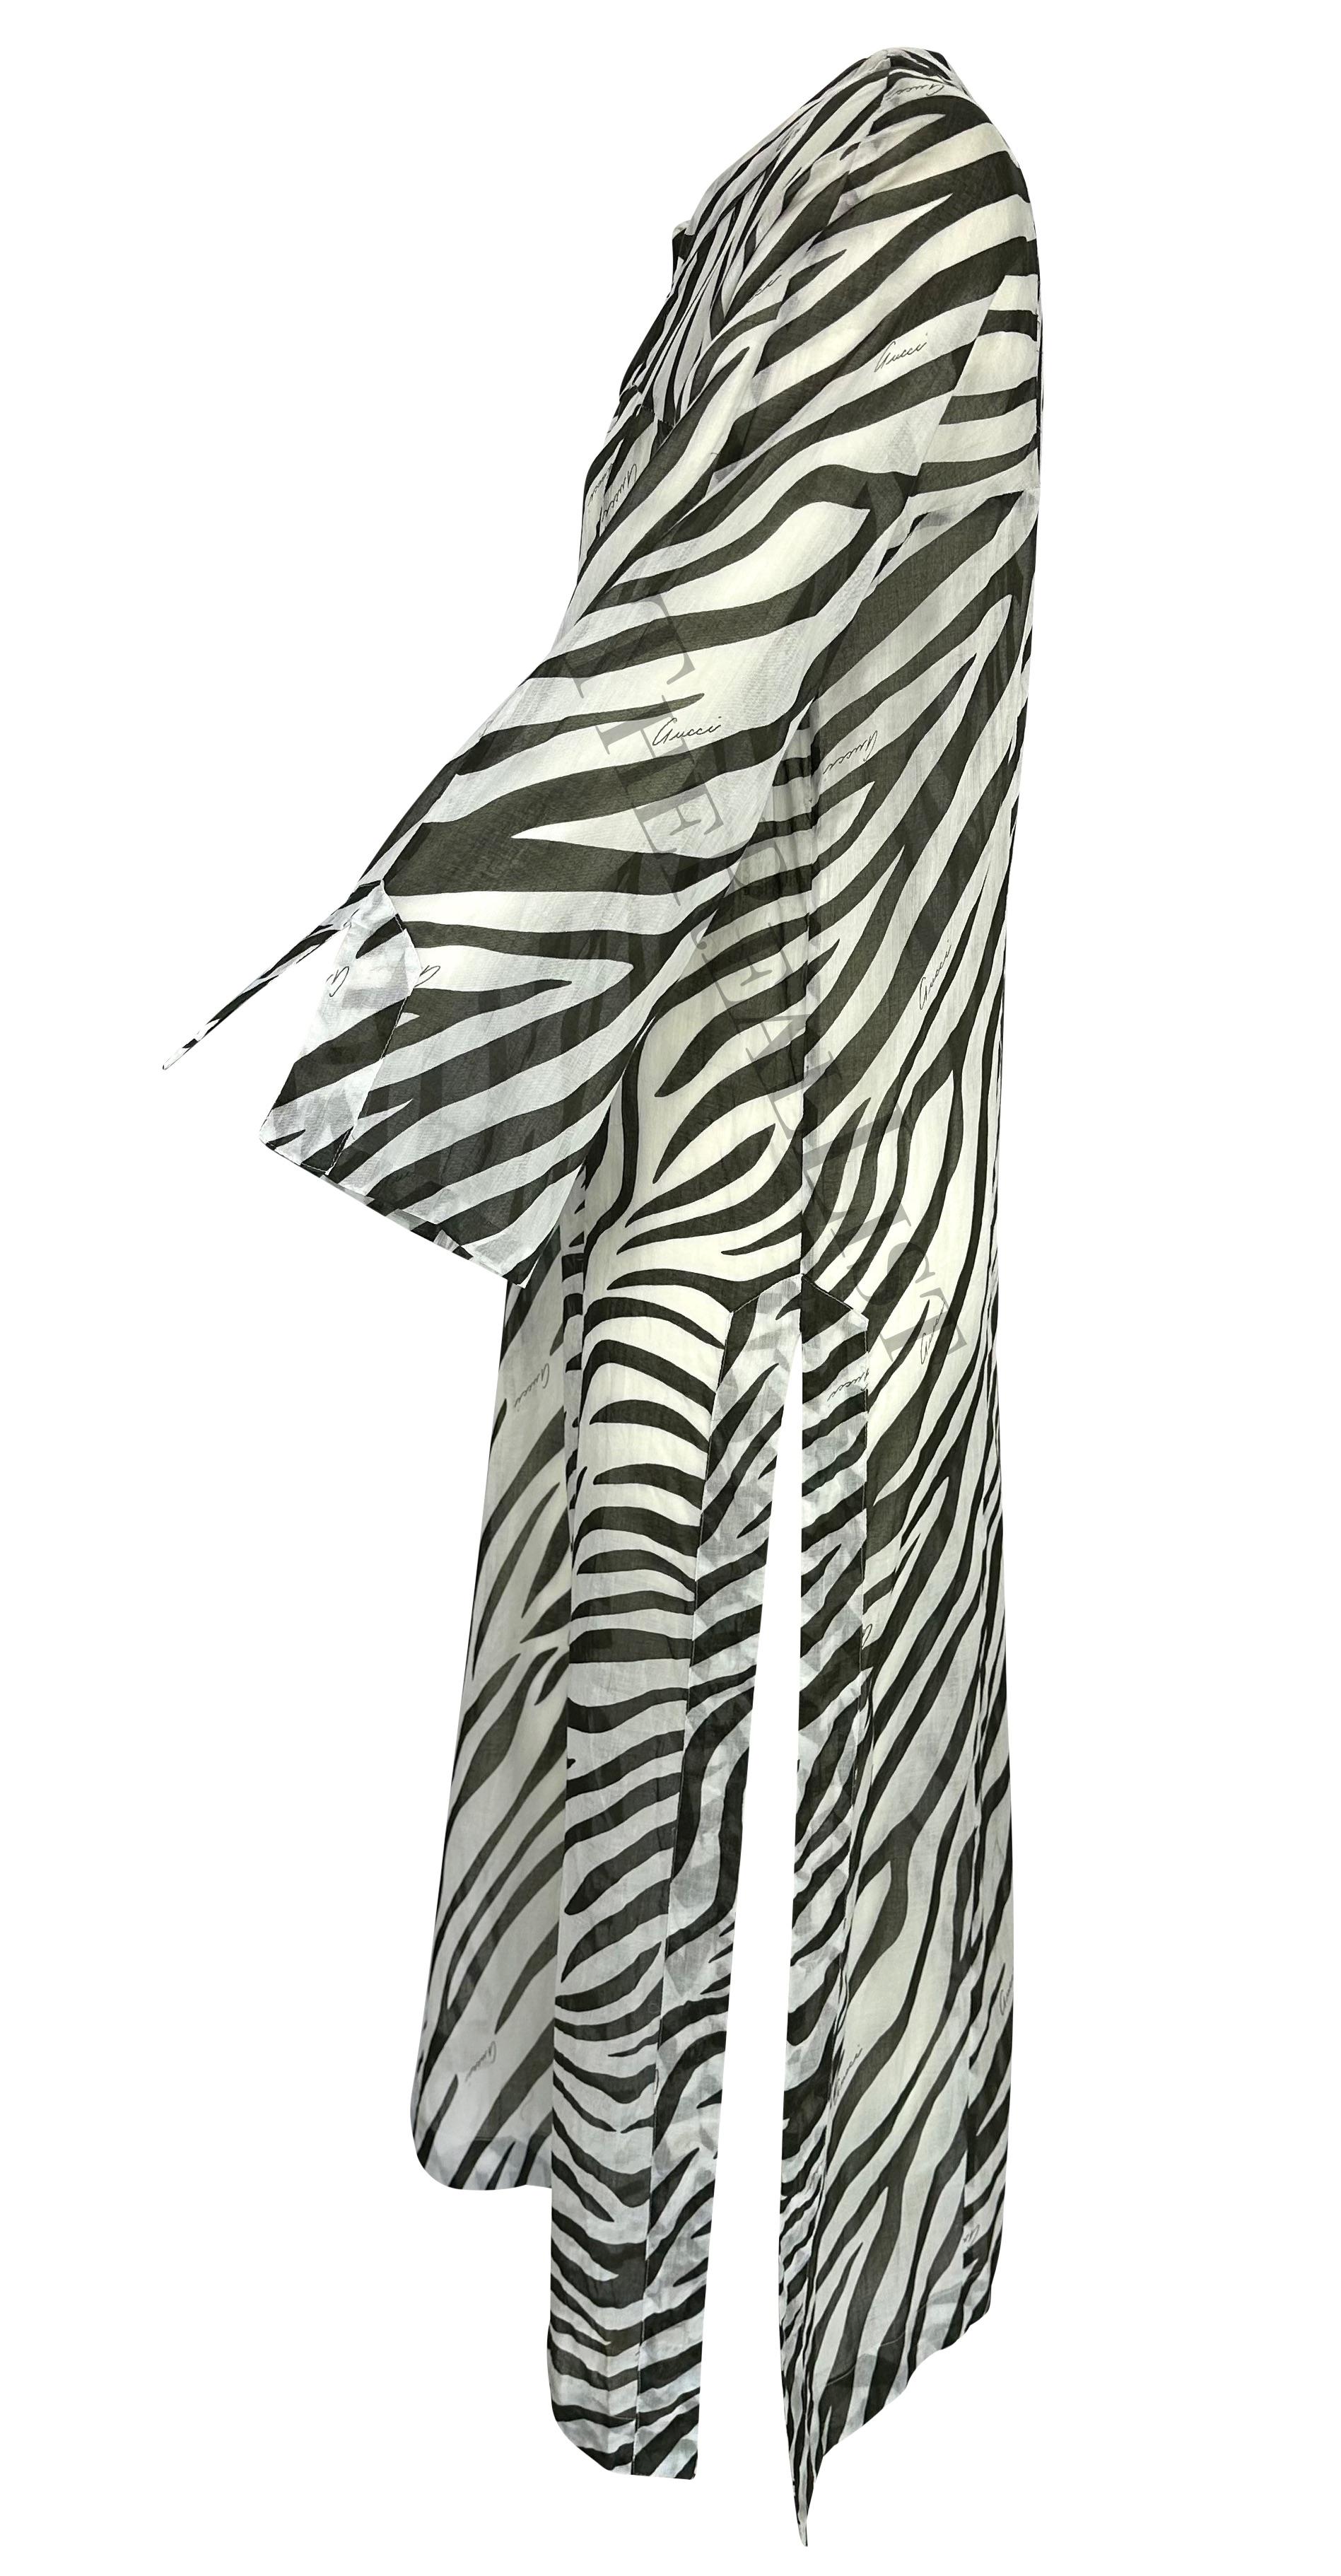 S/S 1996 Gucci by Tom Ford Runway Black White Zebra Print Sheer Kaftan Dress For Sale 3